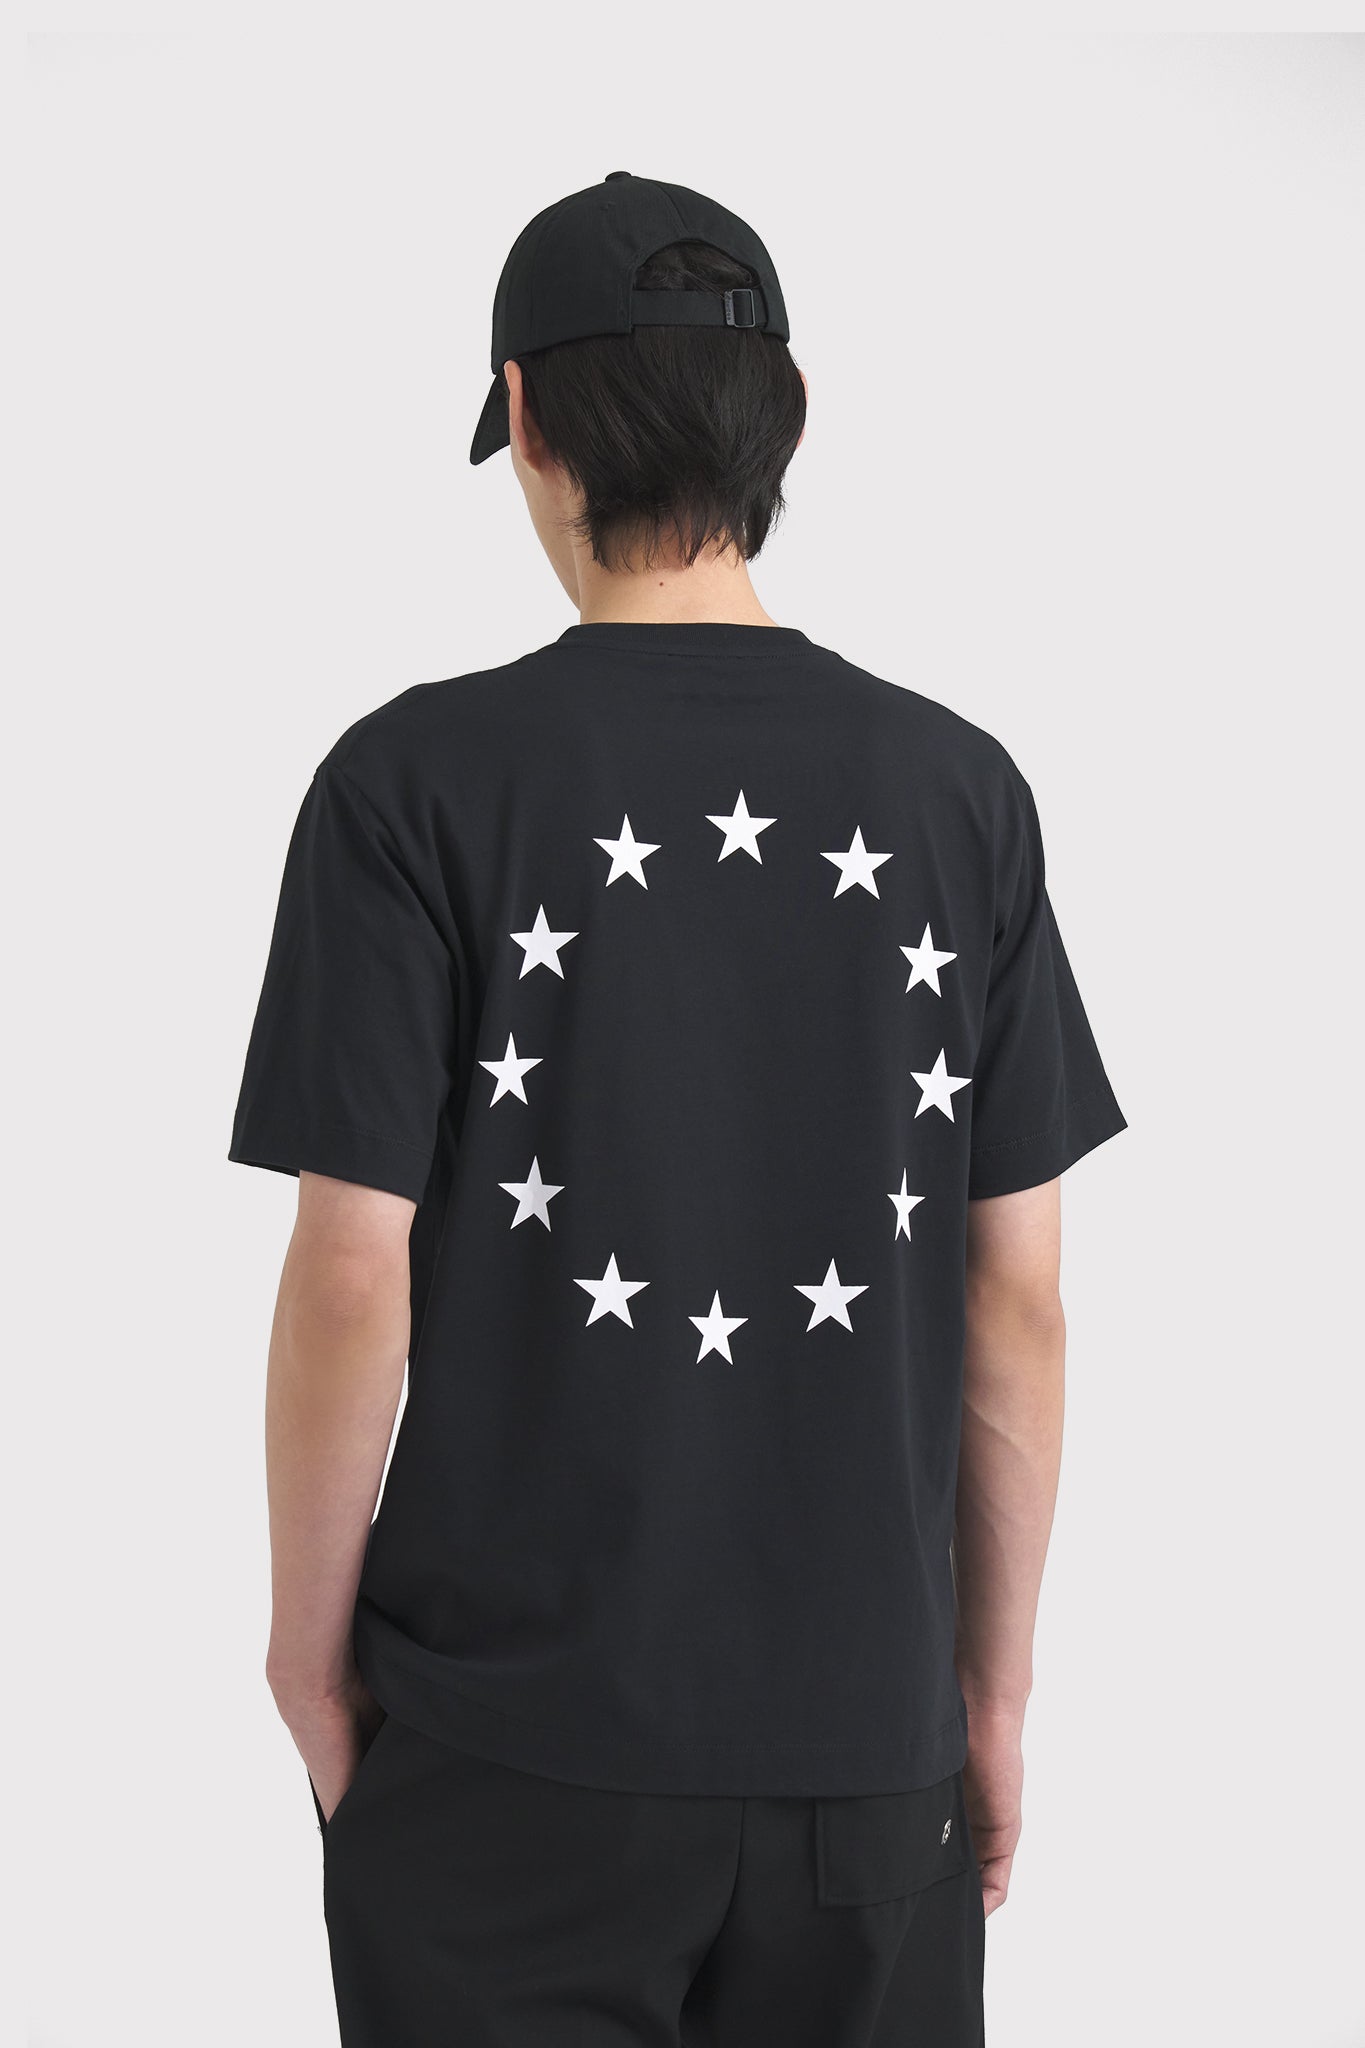 ÉTUDES WONDER EUROPA BACK BLACK T-SHIRTS 4